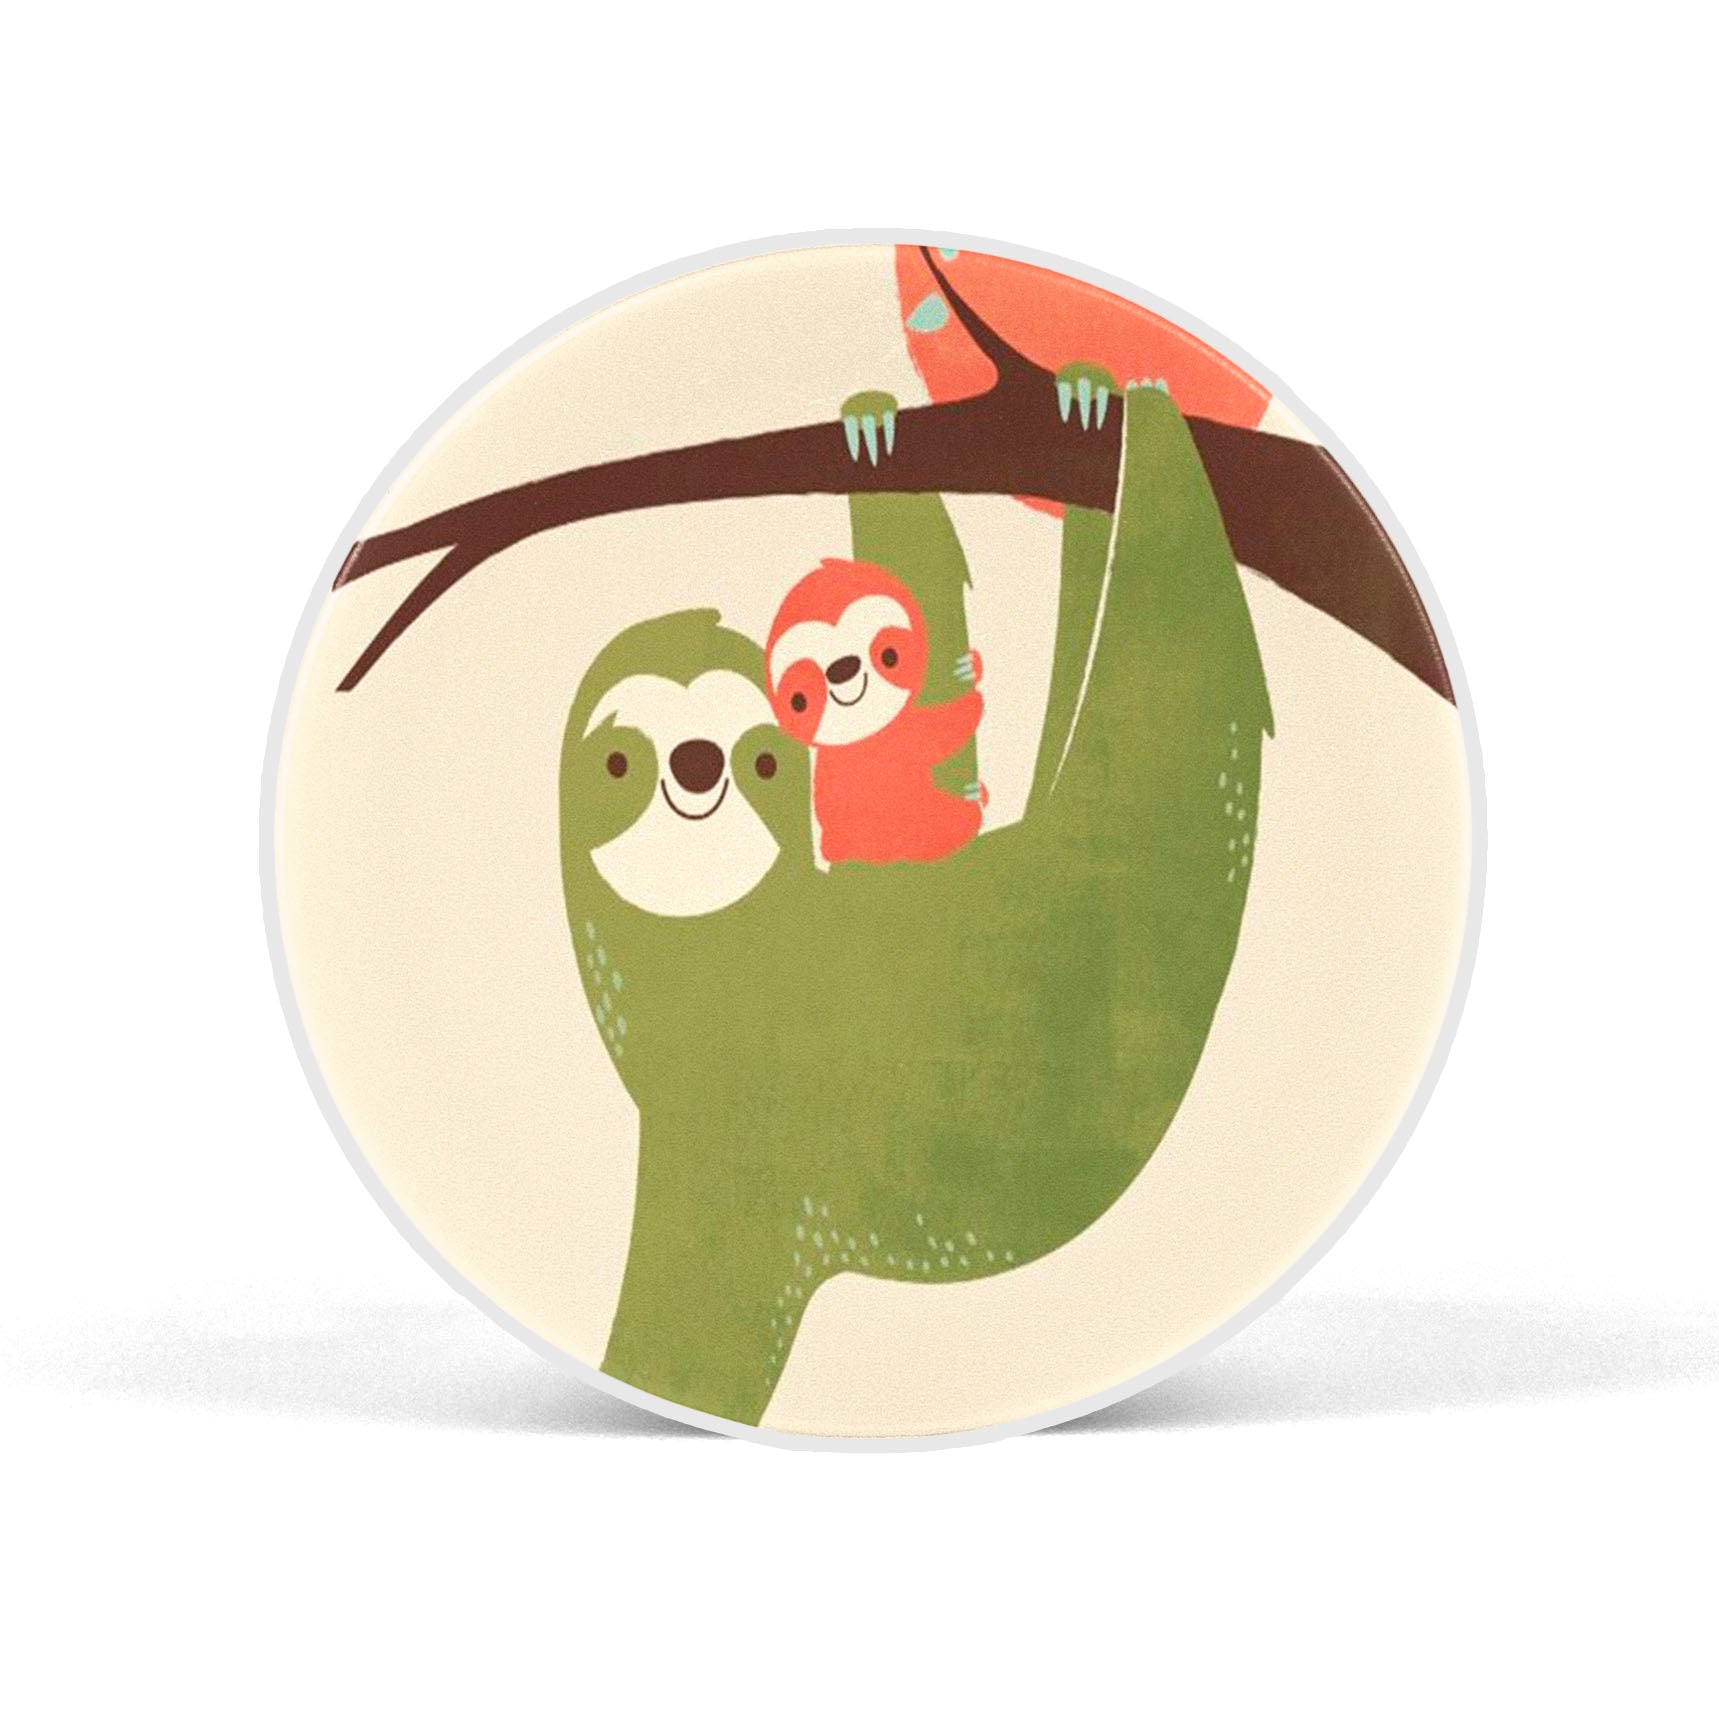 Cute Sloth Mobile Phone Holder Grip - SCOTTSY